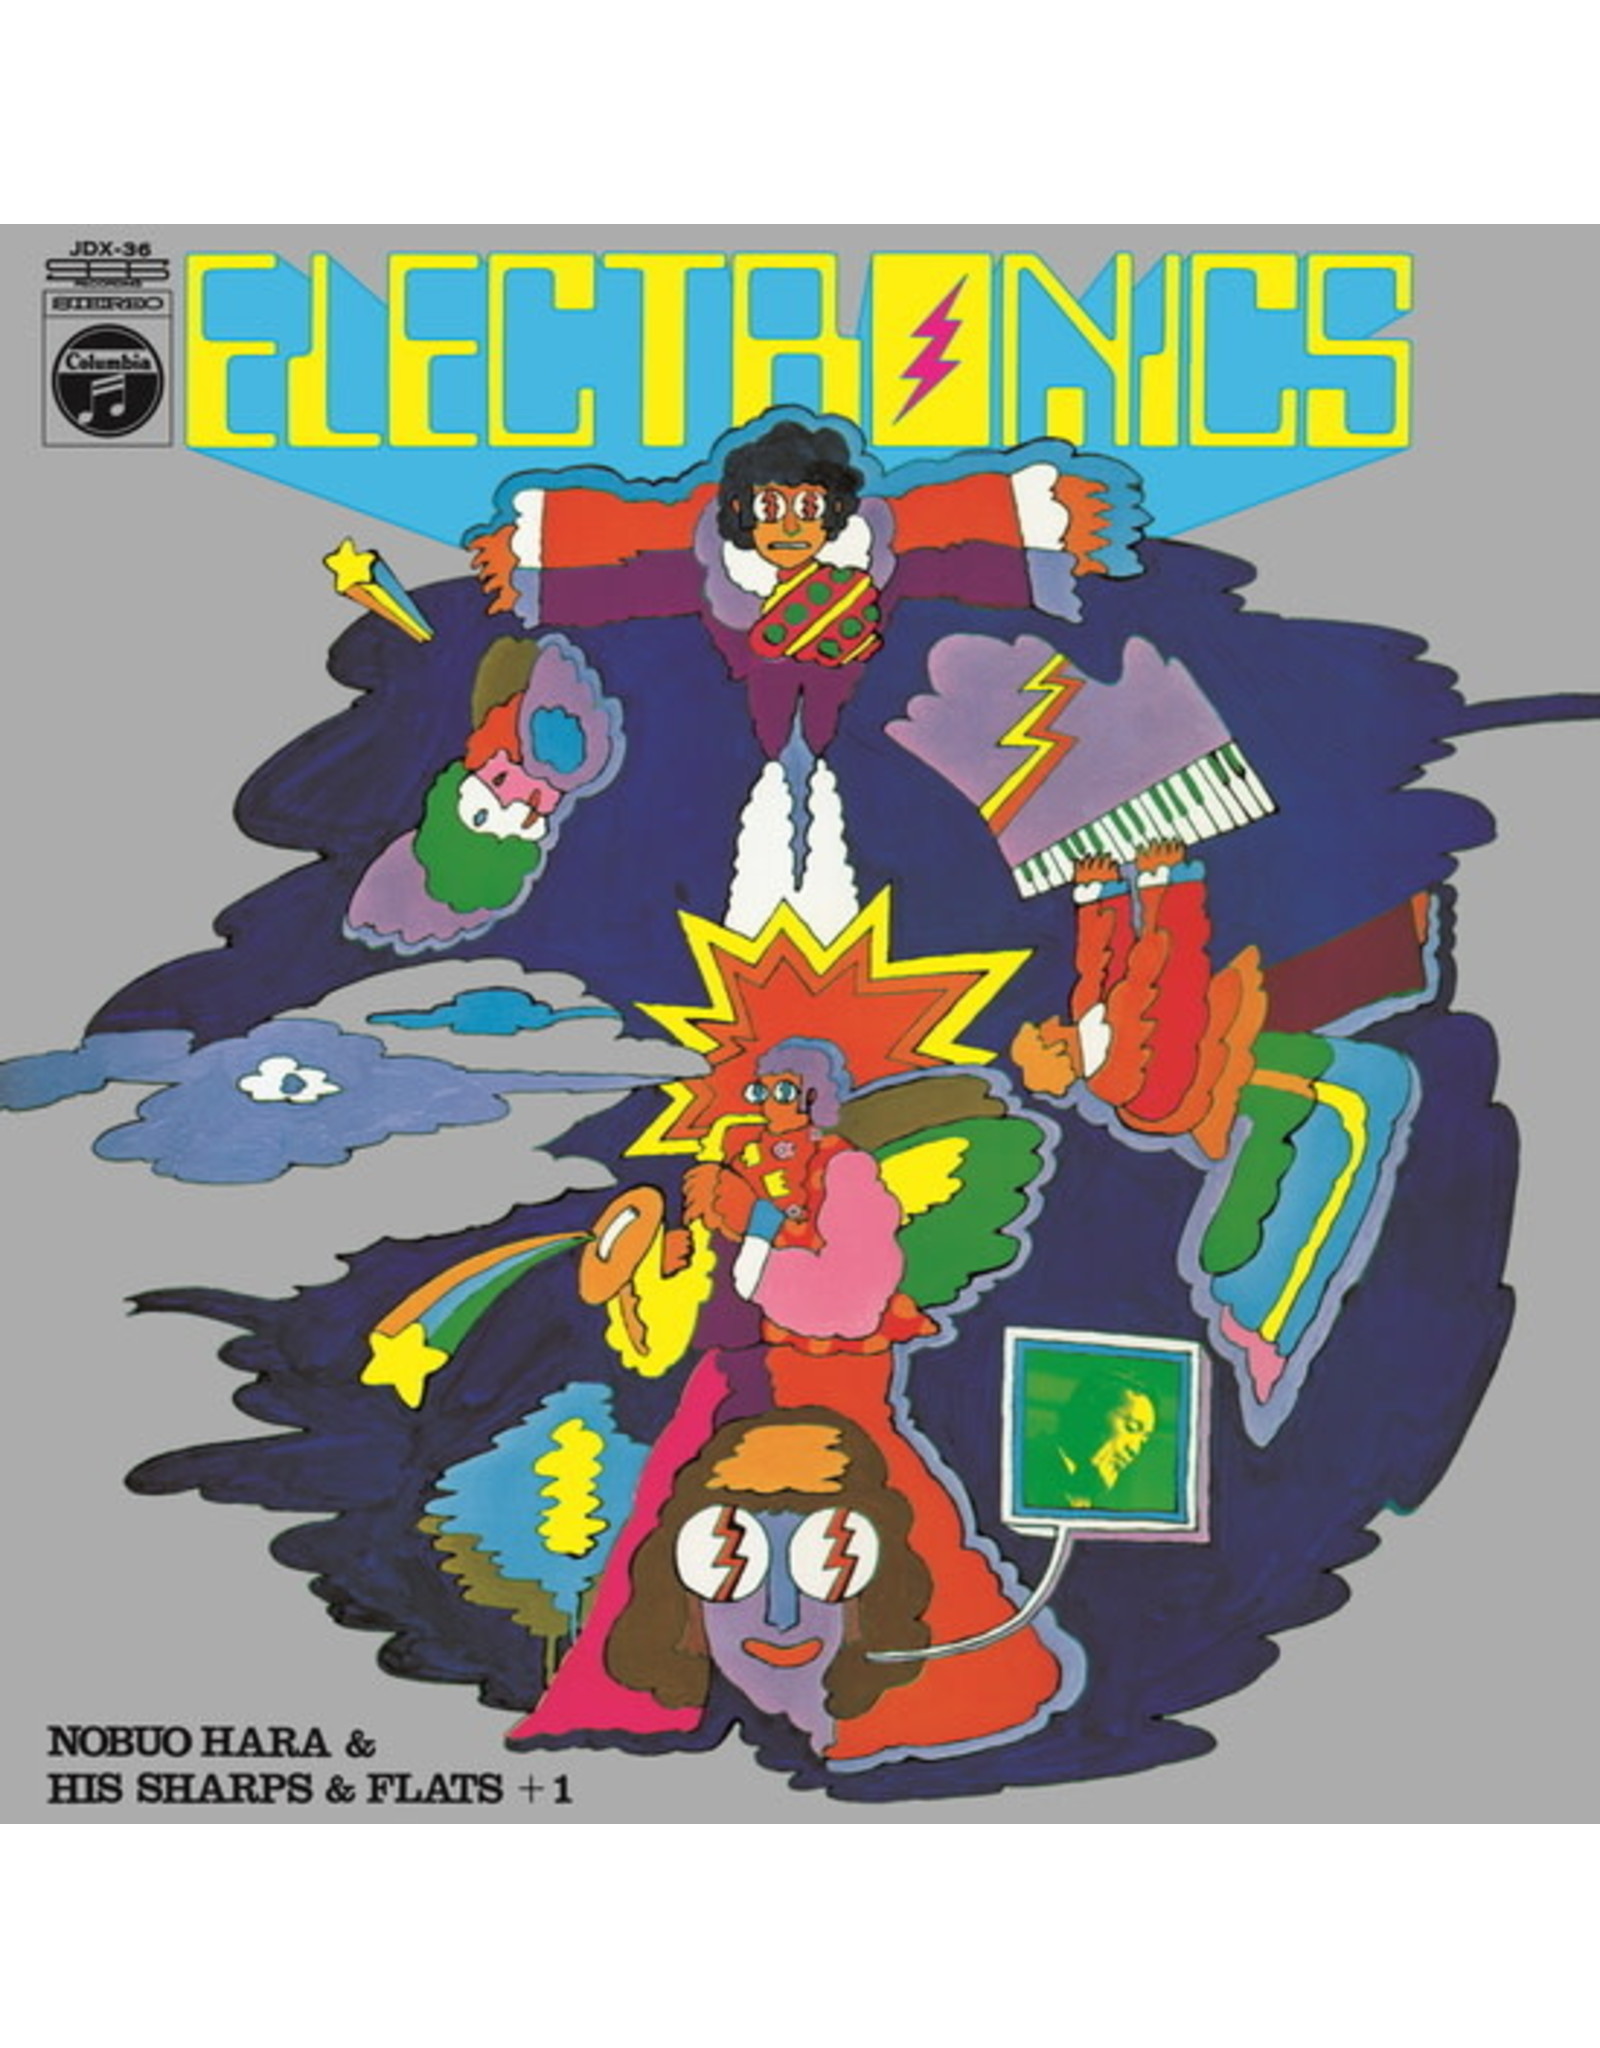 Nippon Columbia Hara, Nobuo and Sharps & Flats + 1: Electronics! LP